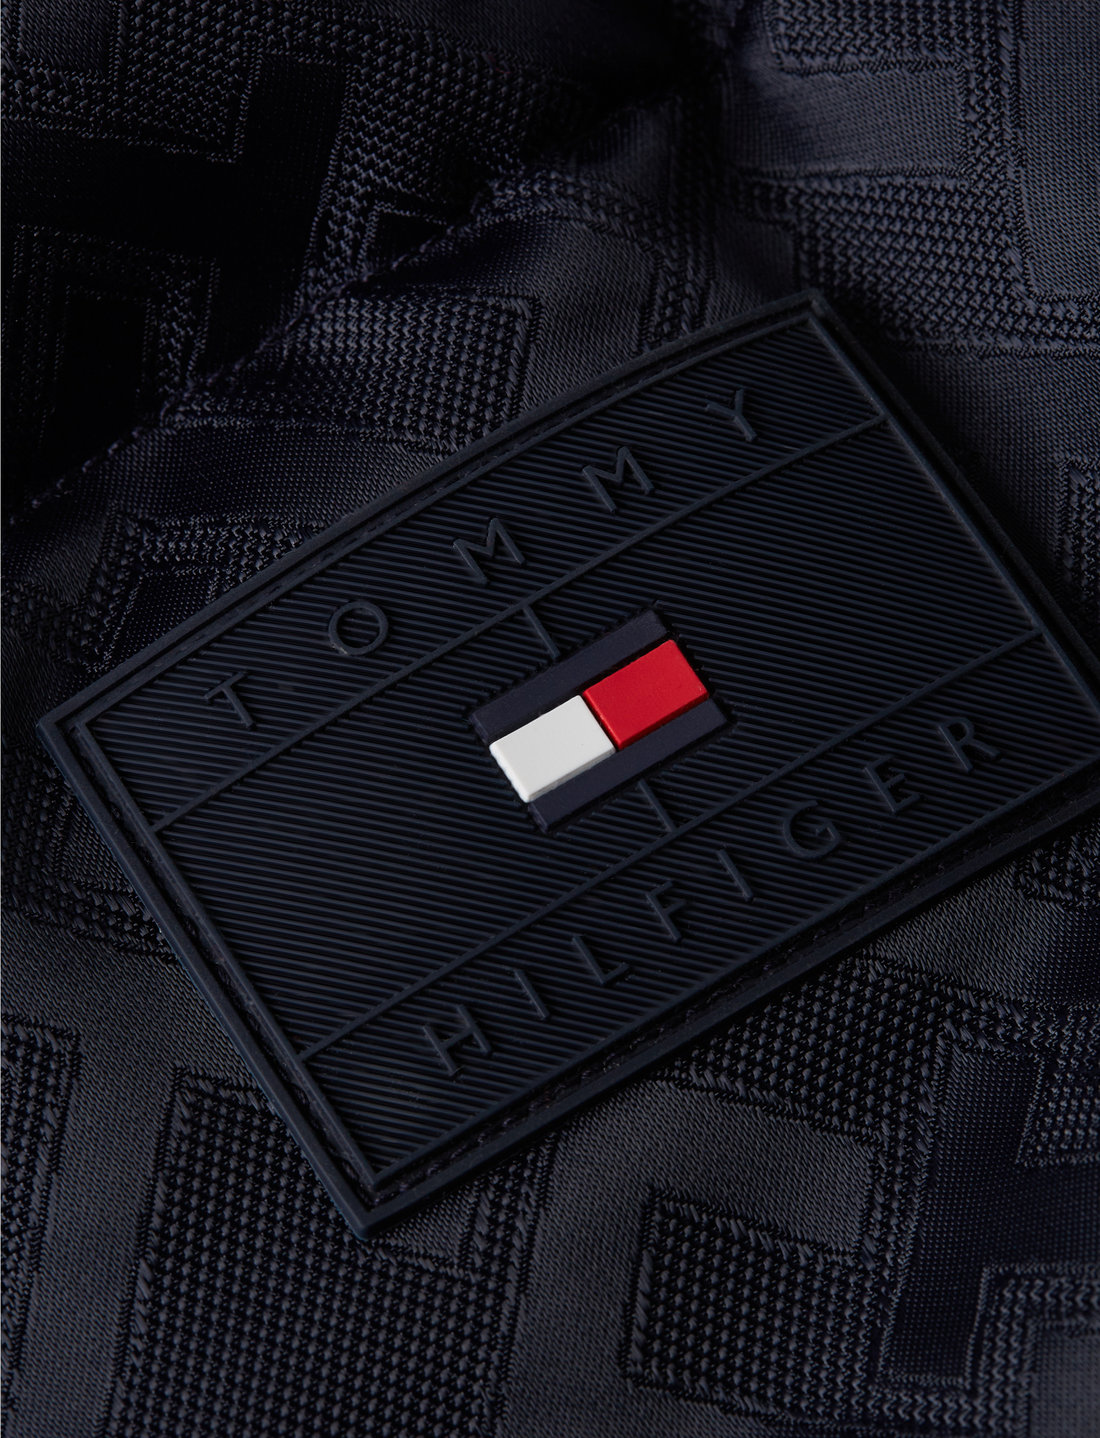 Tommy Hilfiger Men's New York Sketch Monogram Puffer Jacket